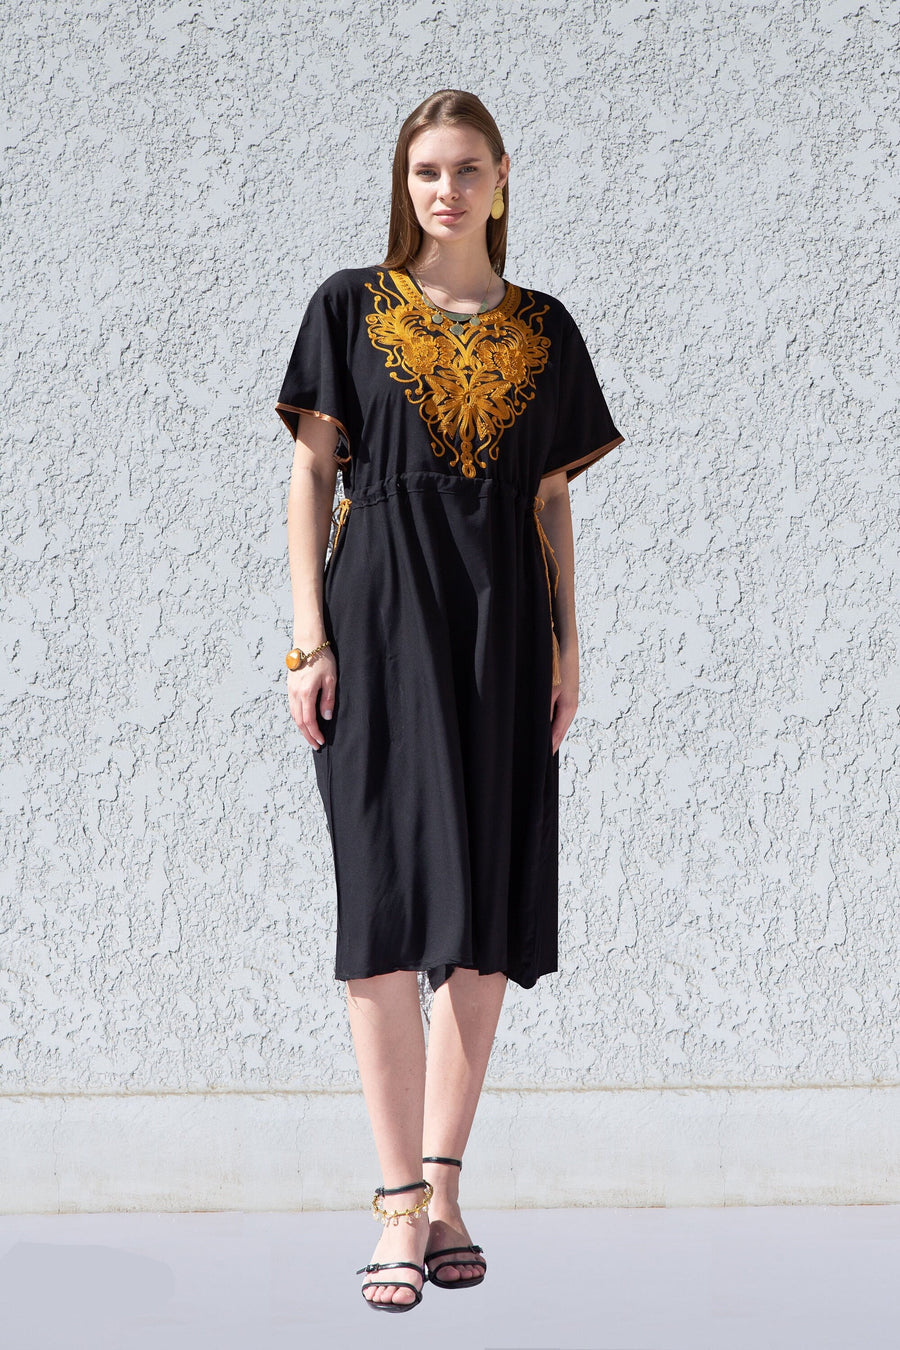 Short Black Tunic kaftan dress, Bohemian embroidery tunic dress, embroidered tunic kaftan, Egyptian cotton. Summer, casual, home dress